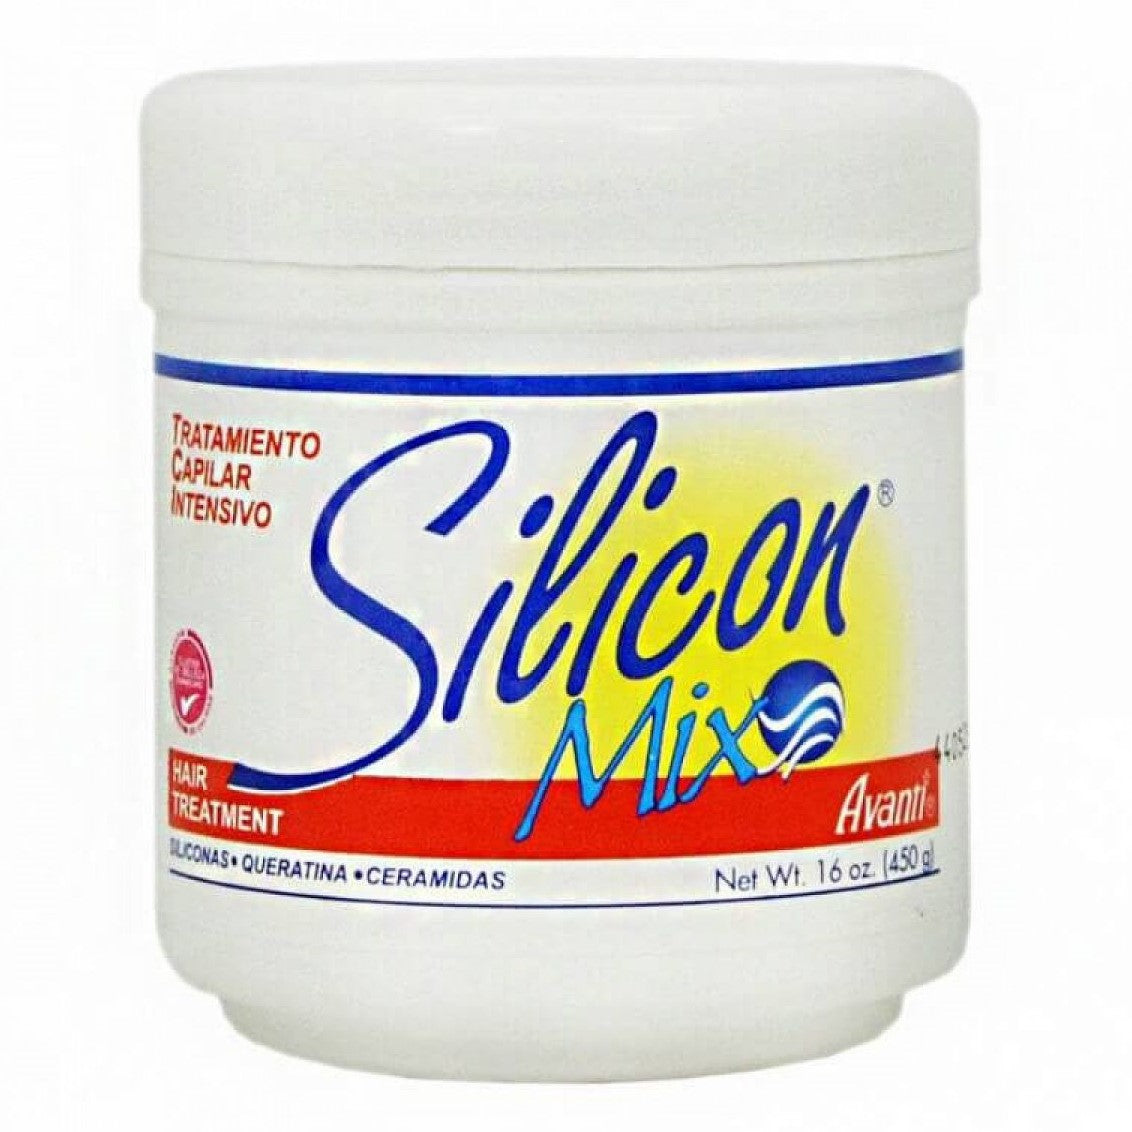 Silicon Mix Hair Treatment 450g - Transform your Hair - Give Your Hair Love!